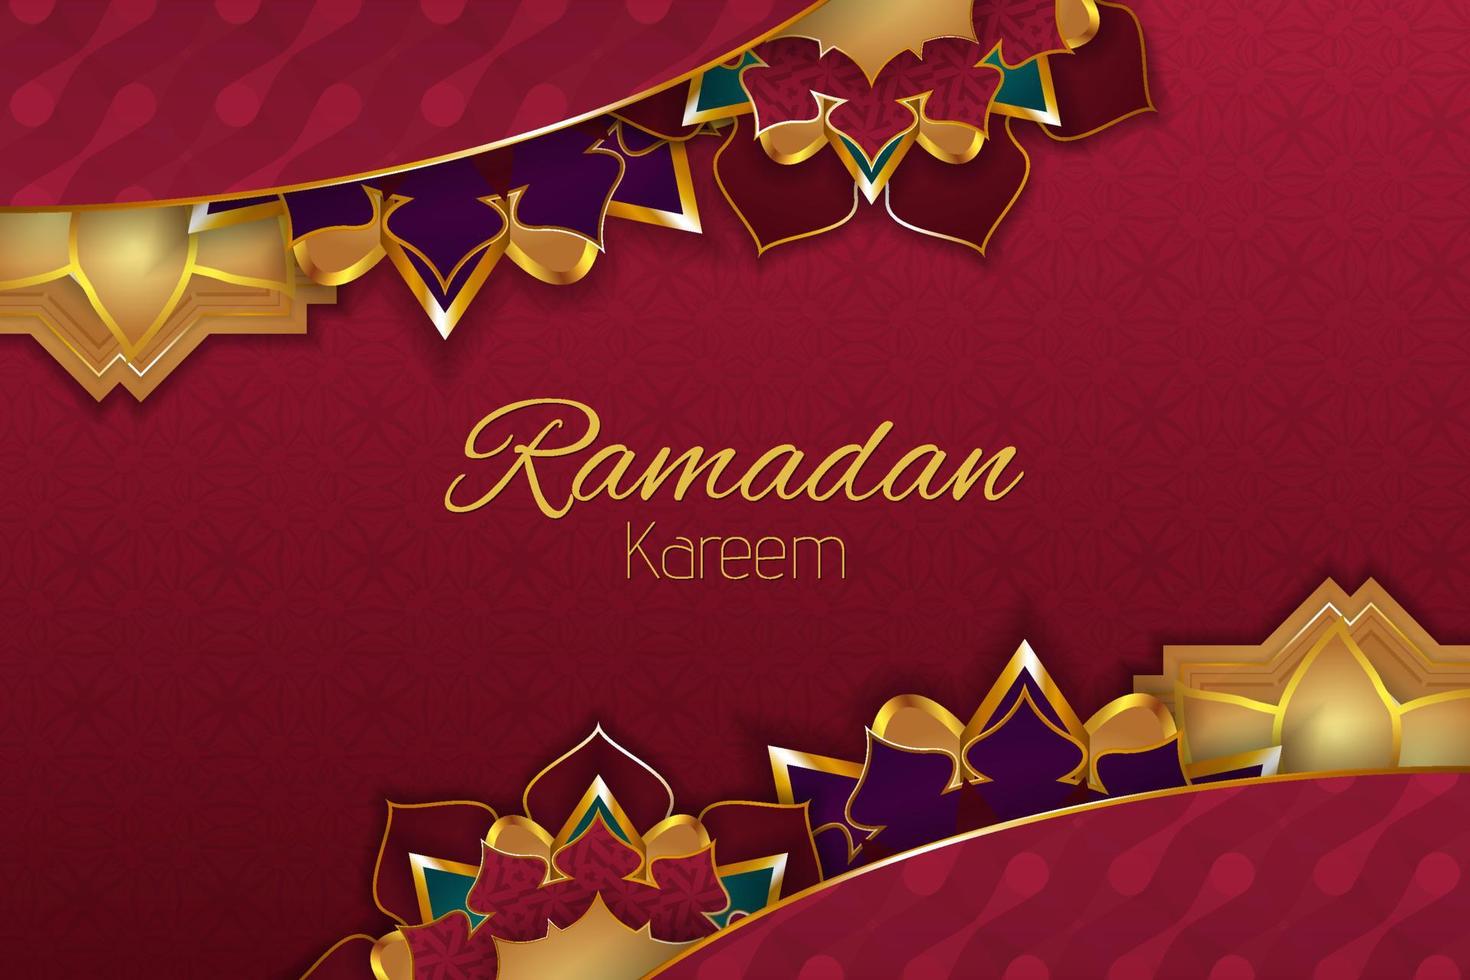 fundo islâmico ramadan kareem com elemento vetor